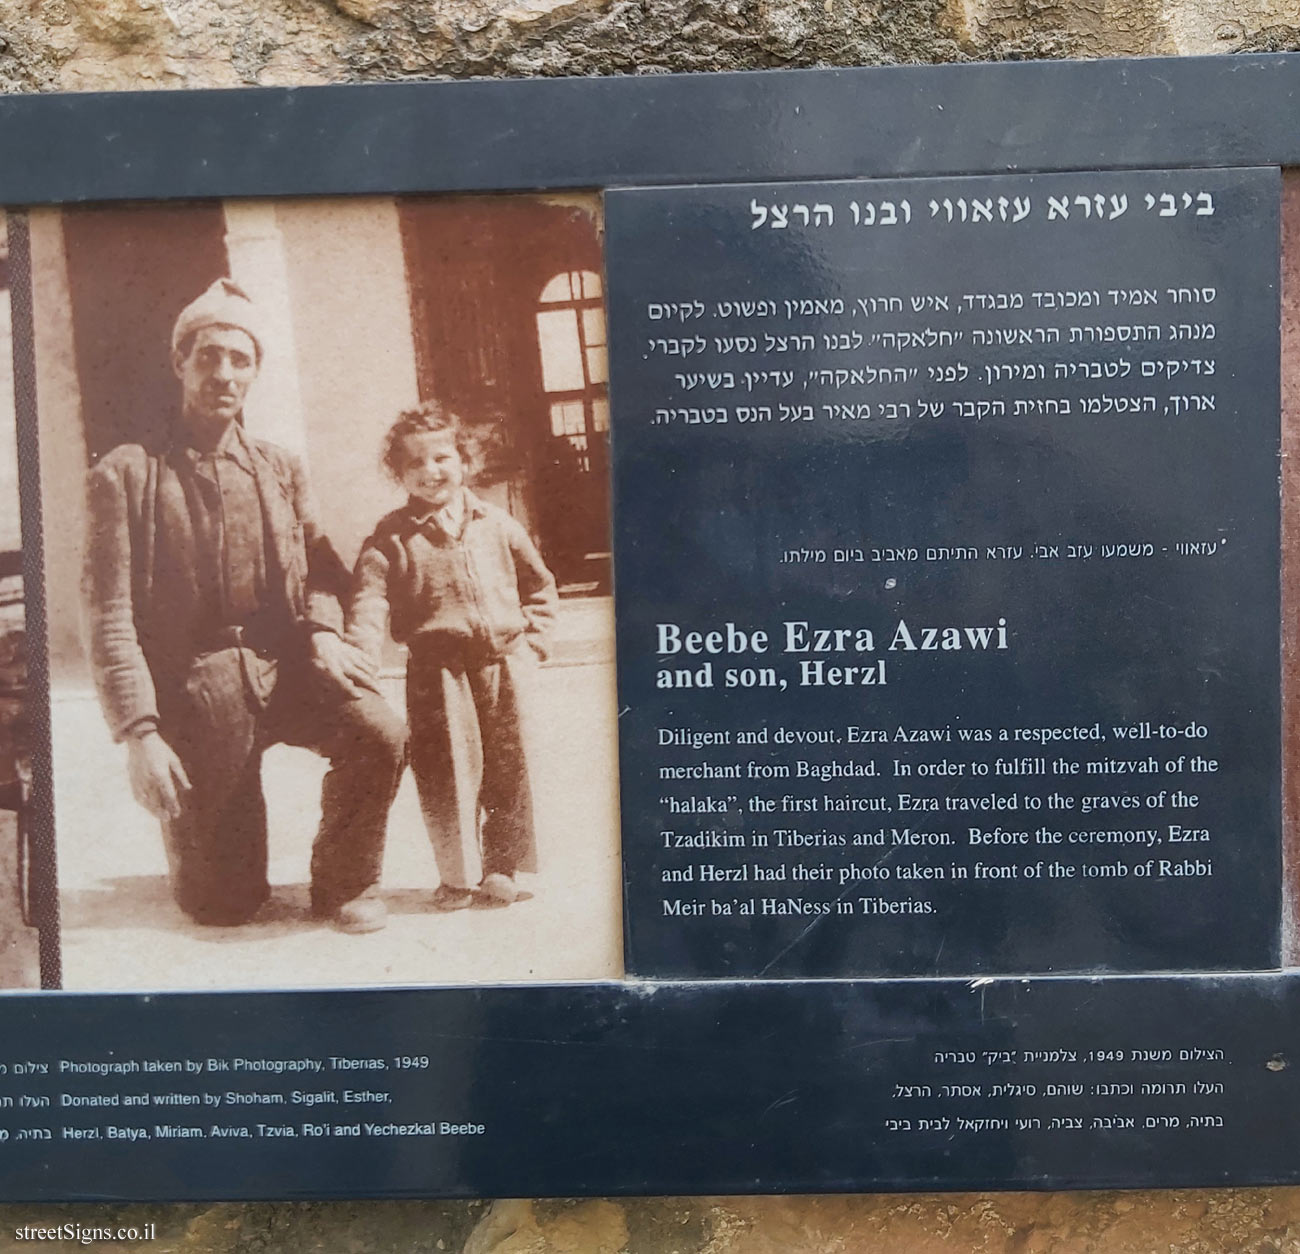 Jerusalem - Photograph in stone - Ohel Moshe - Beebe Ezra Azawi